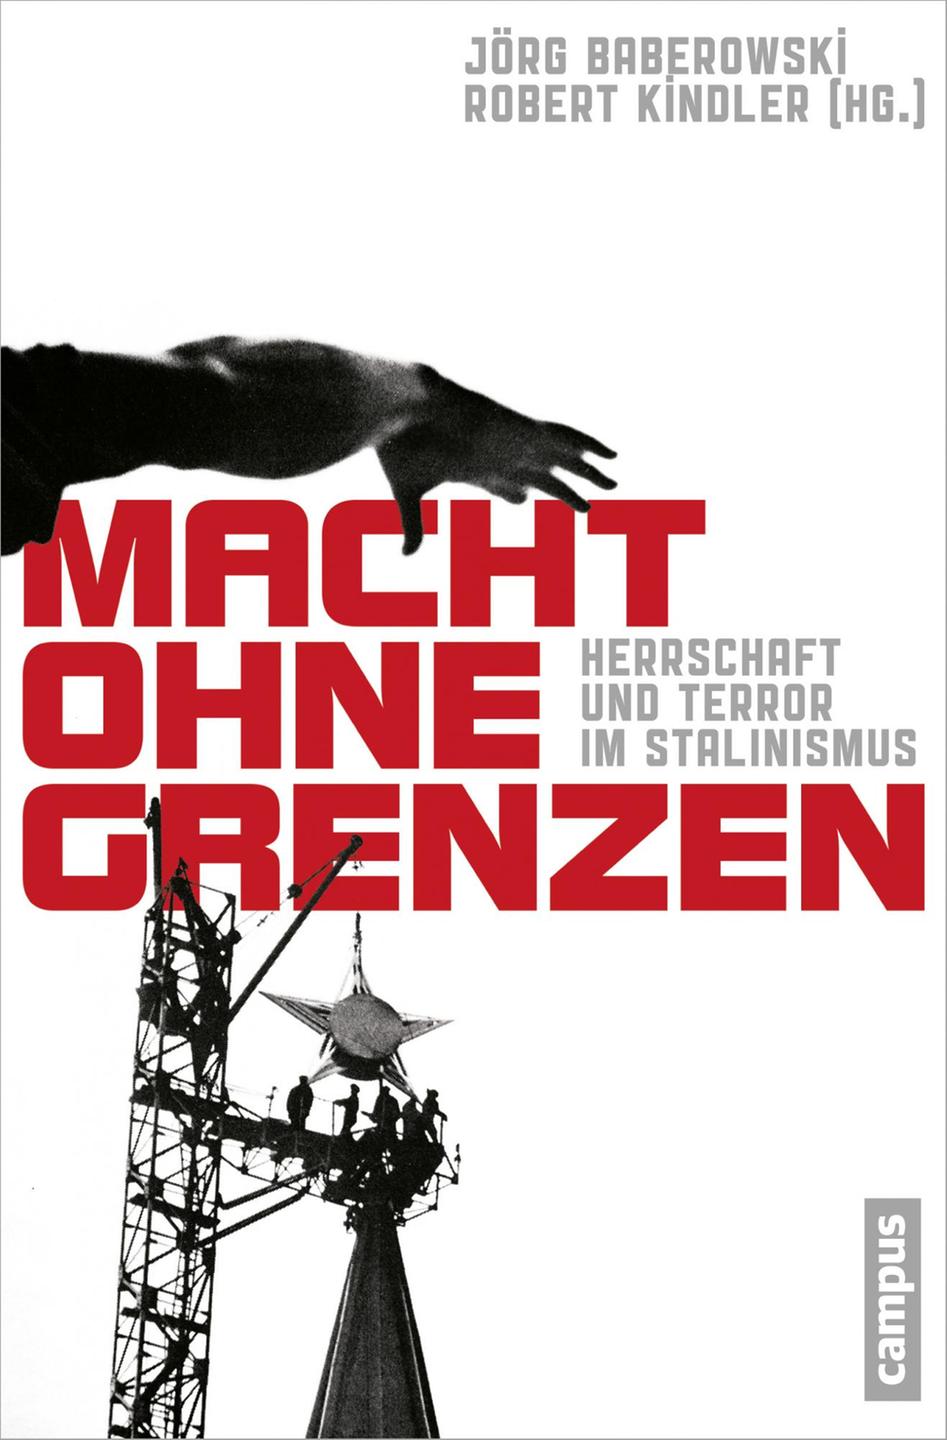 Cover Jörg Baberowski, Robert Kindler (Hg.) "Macht ohne Grenzen"